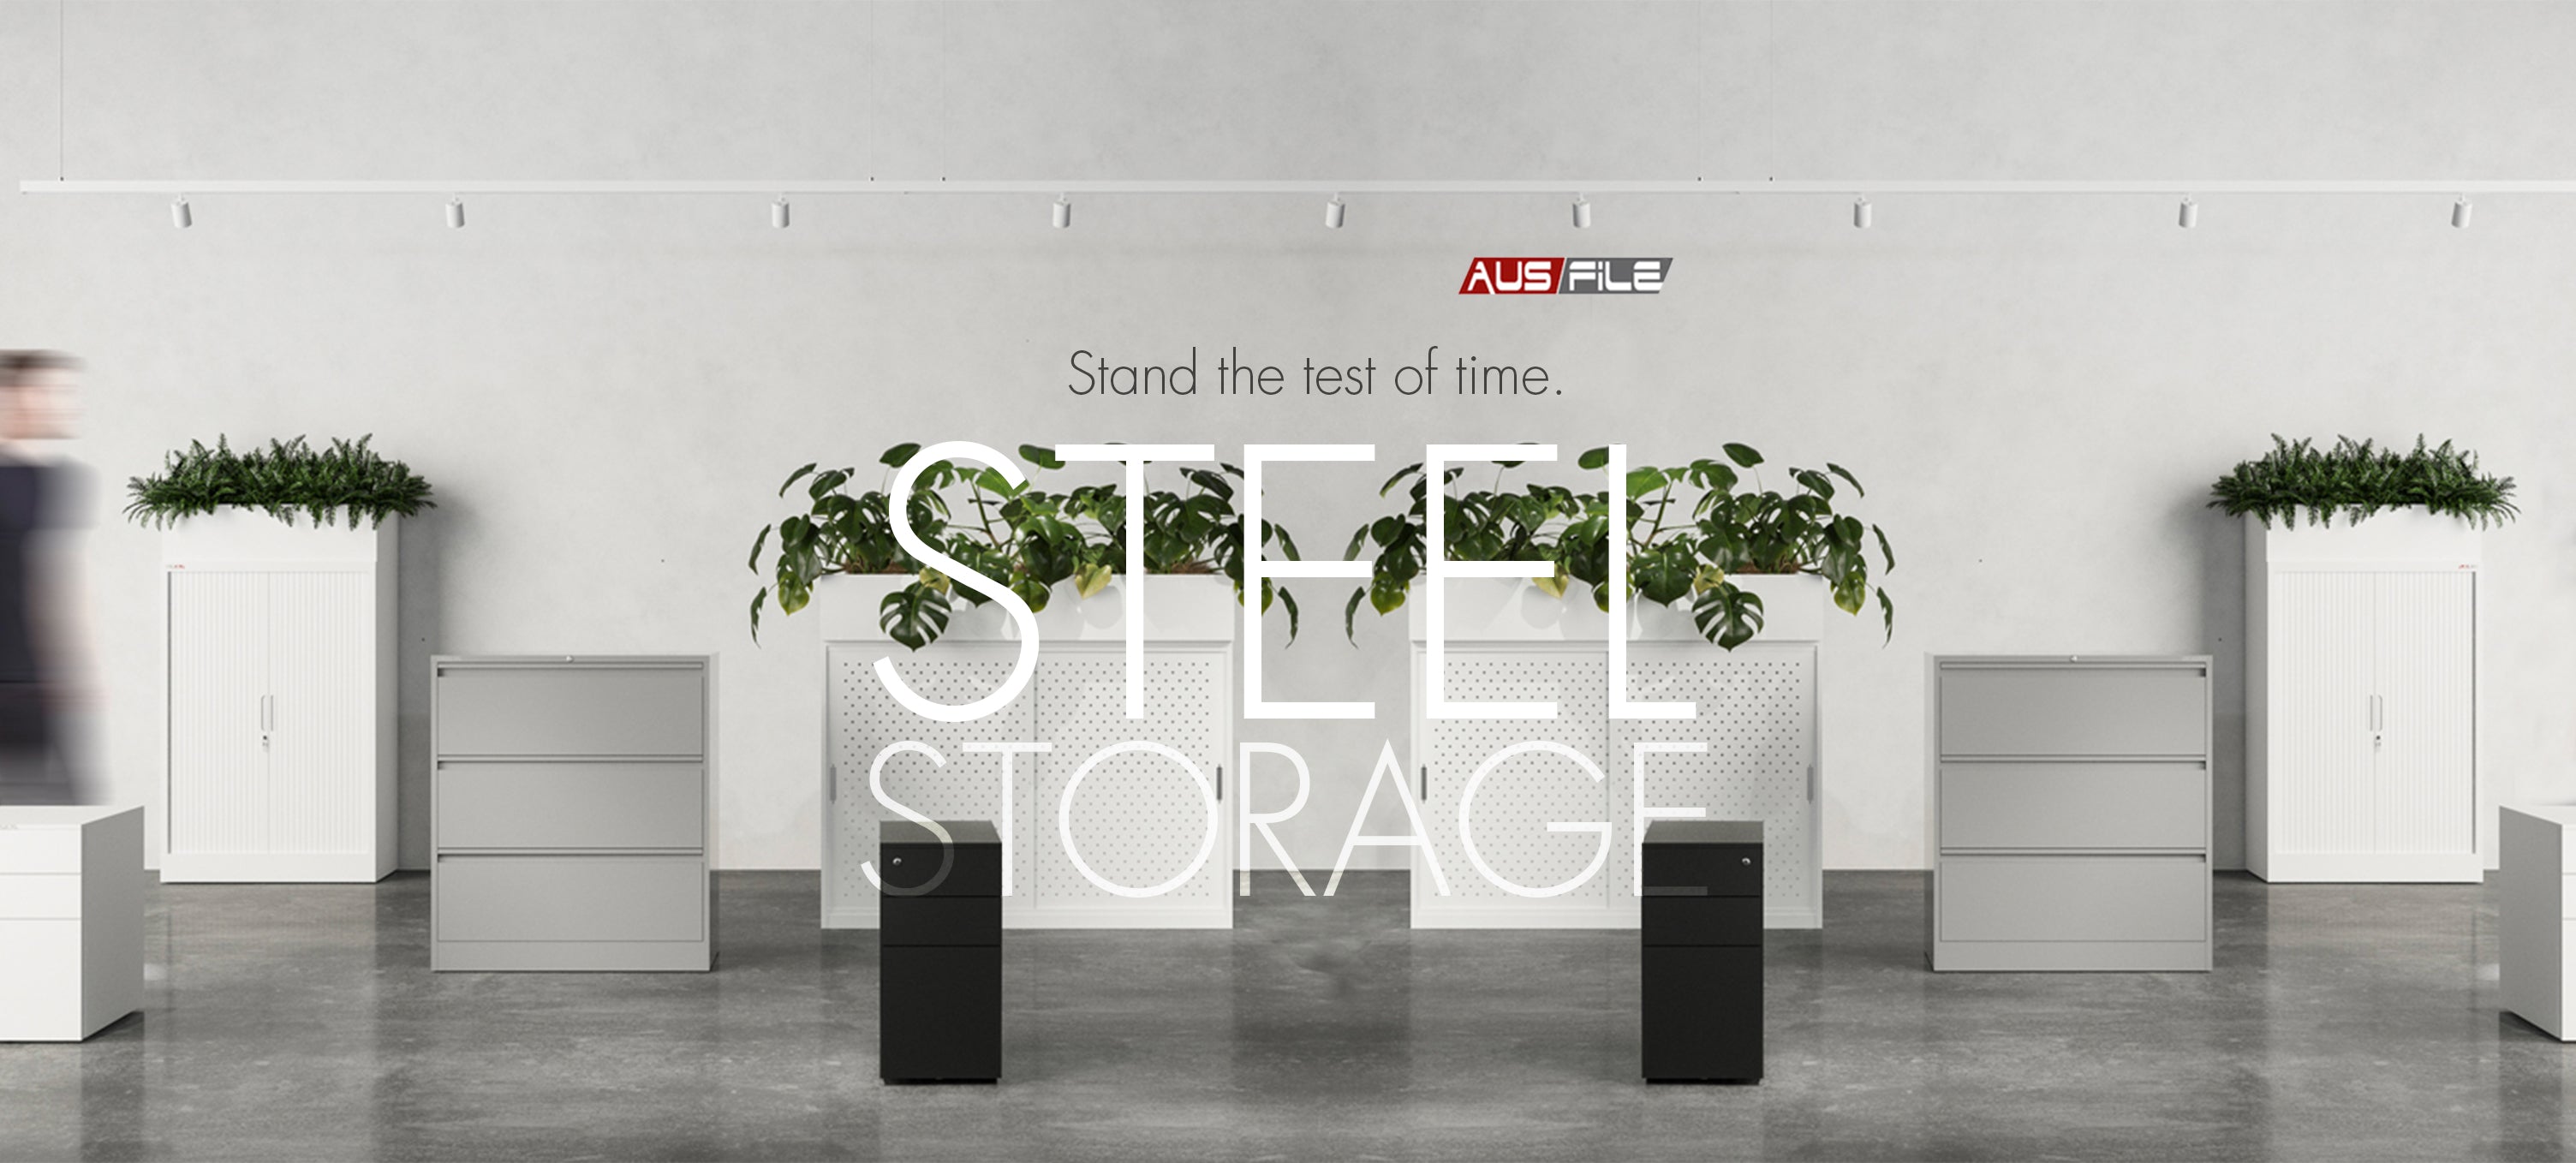 Ausfile steel storage furniture solutions